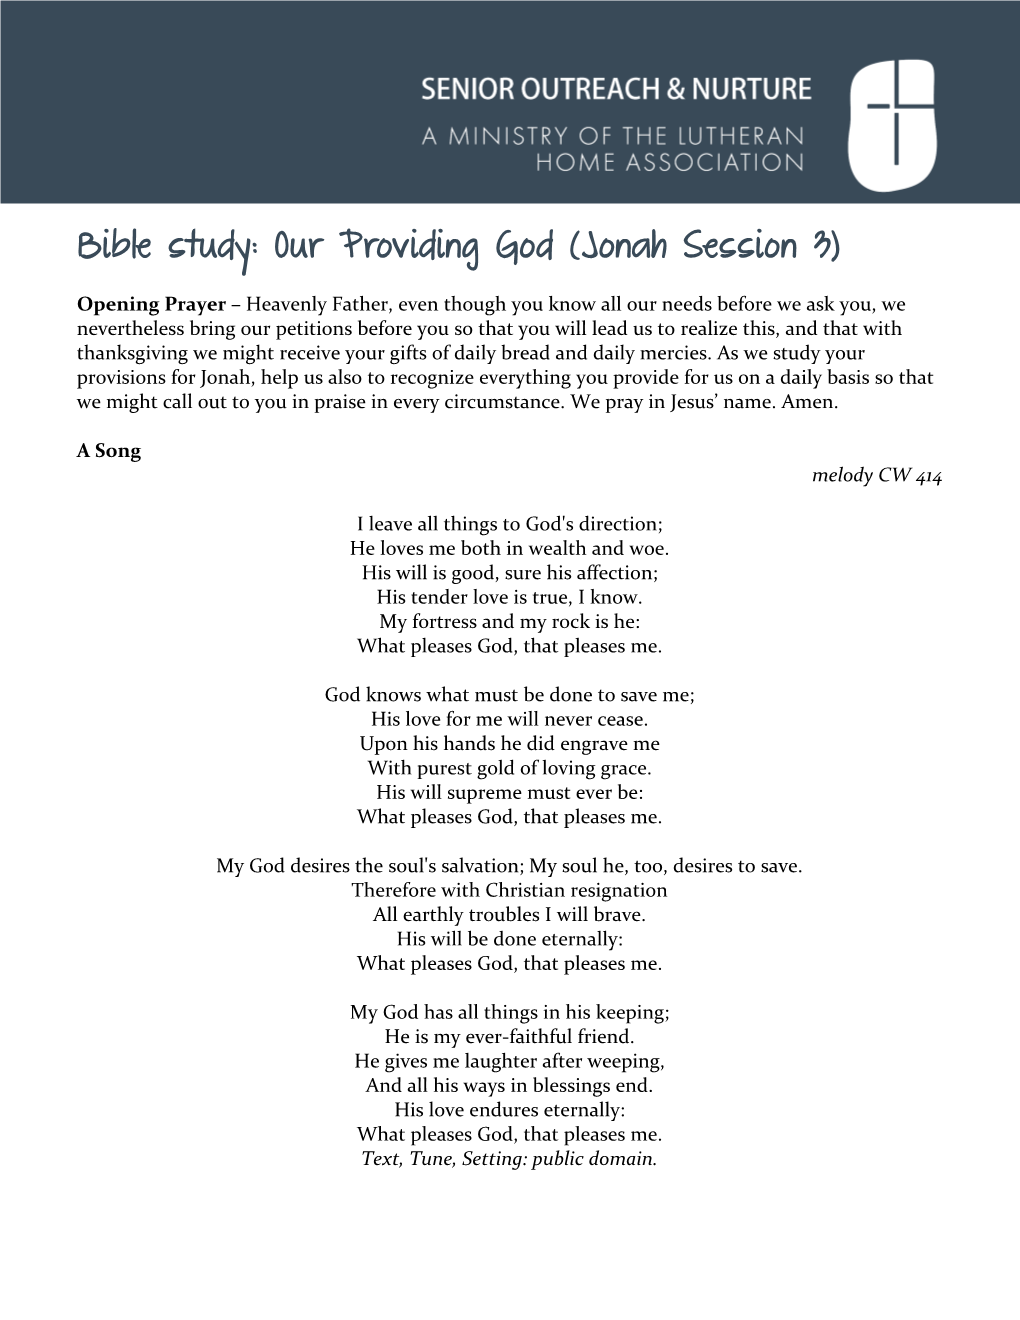 Bible Study: Our Providing God (Jonah Session 3)